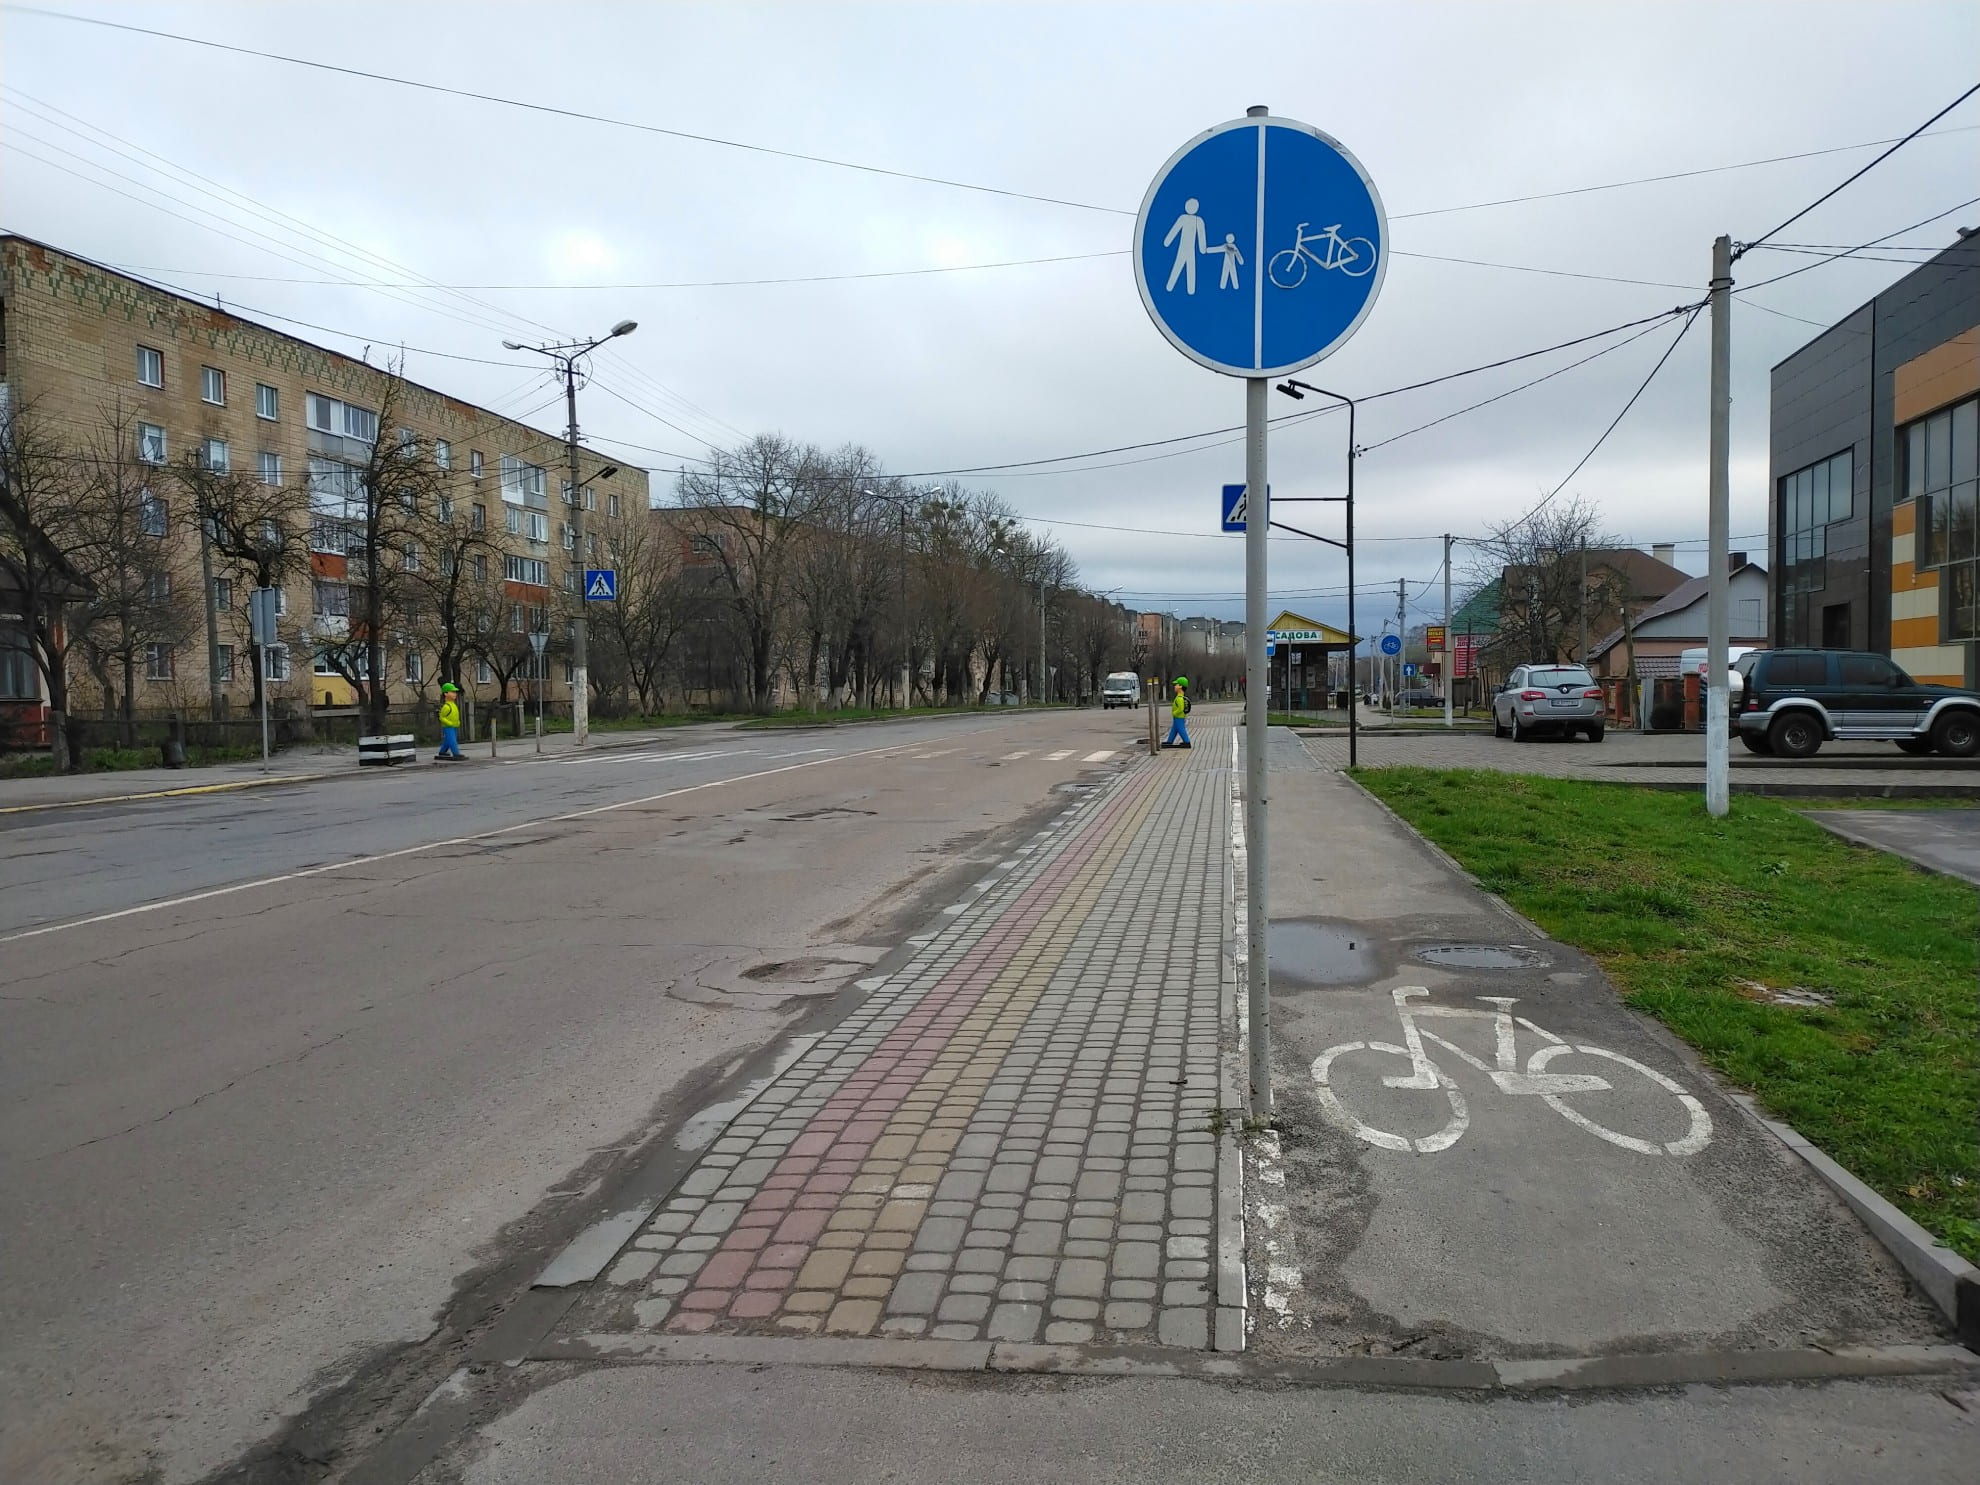 Dubno bike path 3